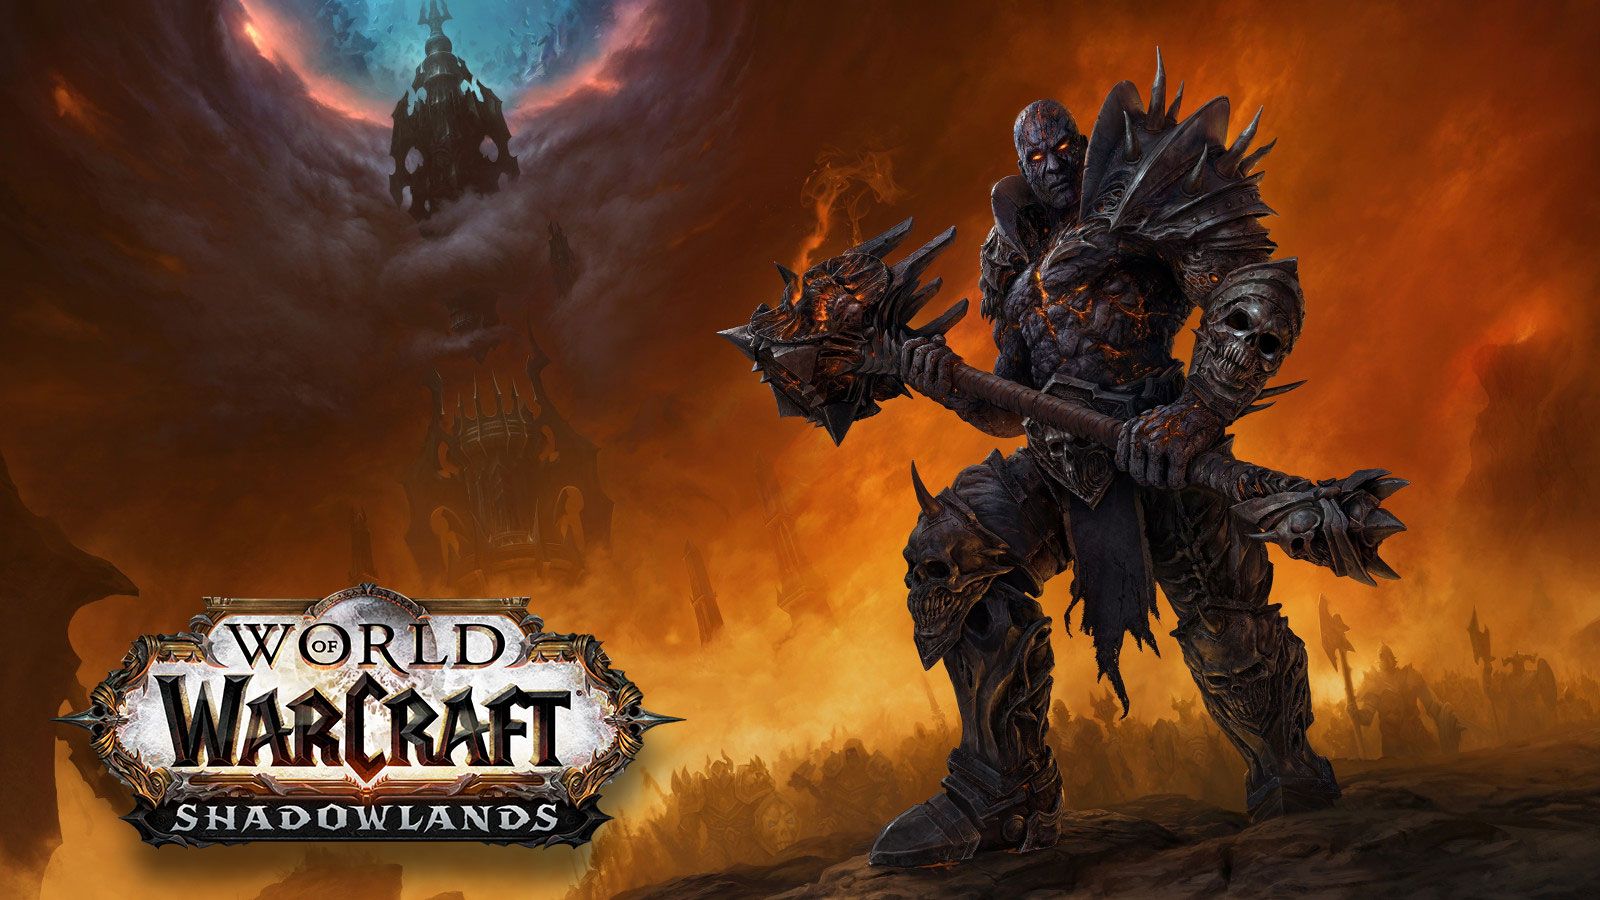 WoW Shadowlands expansion details revealed: new Raids, Covenants